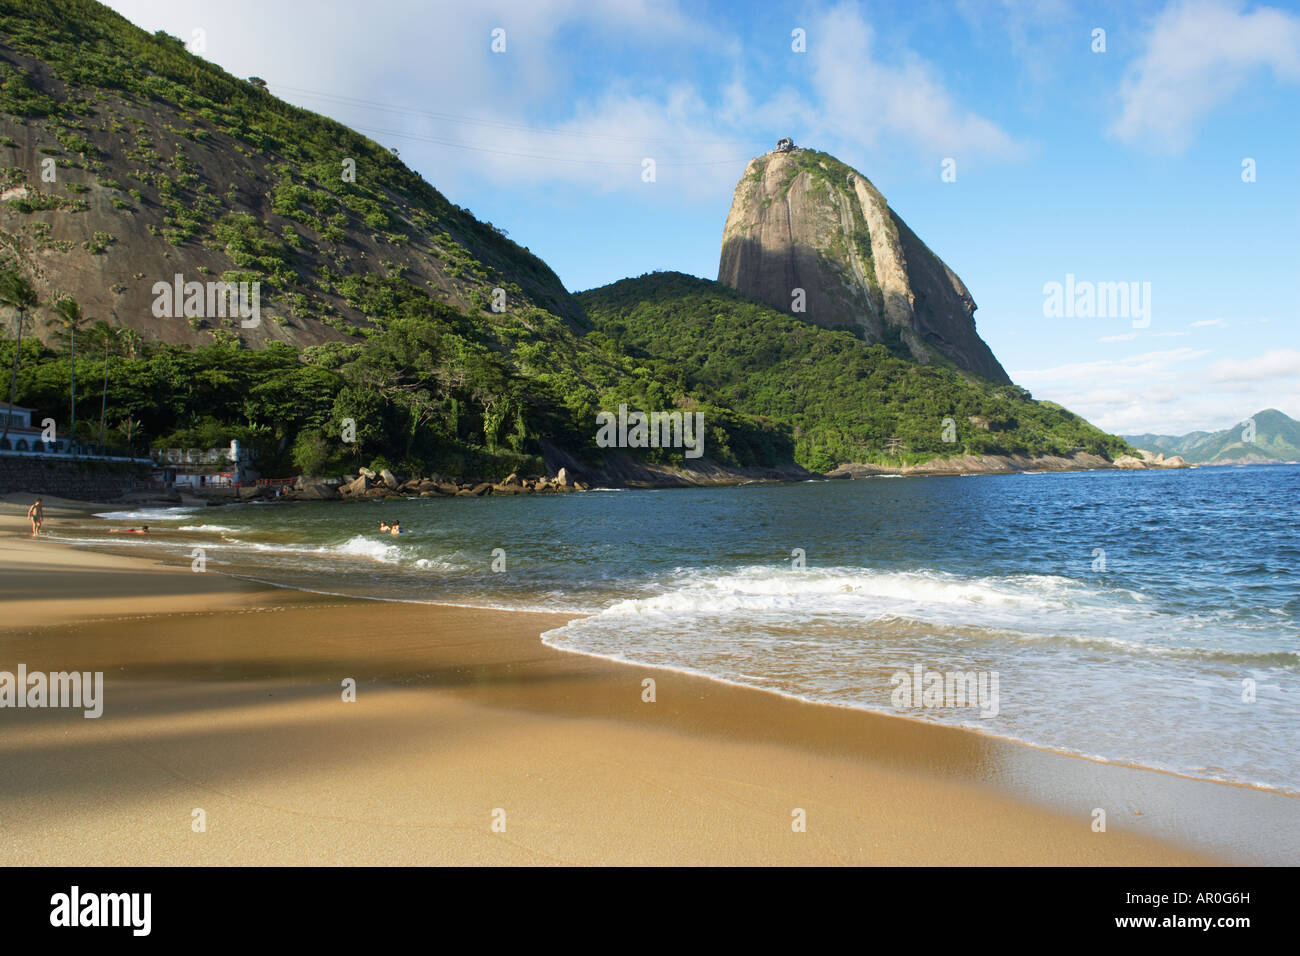 Vista di Sugarloaf Pao de Acucar su Praia Vermelha a Rio de Janeiro in Brasile Foto Stock